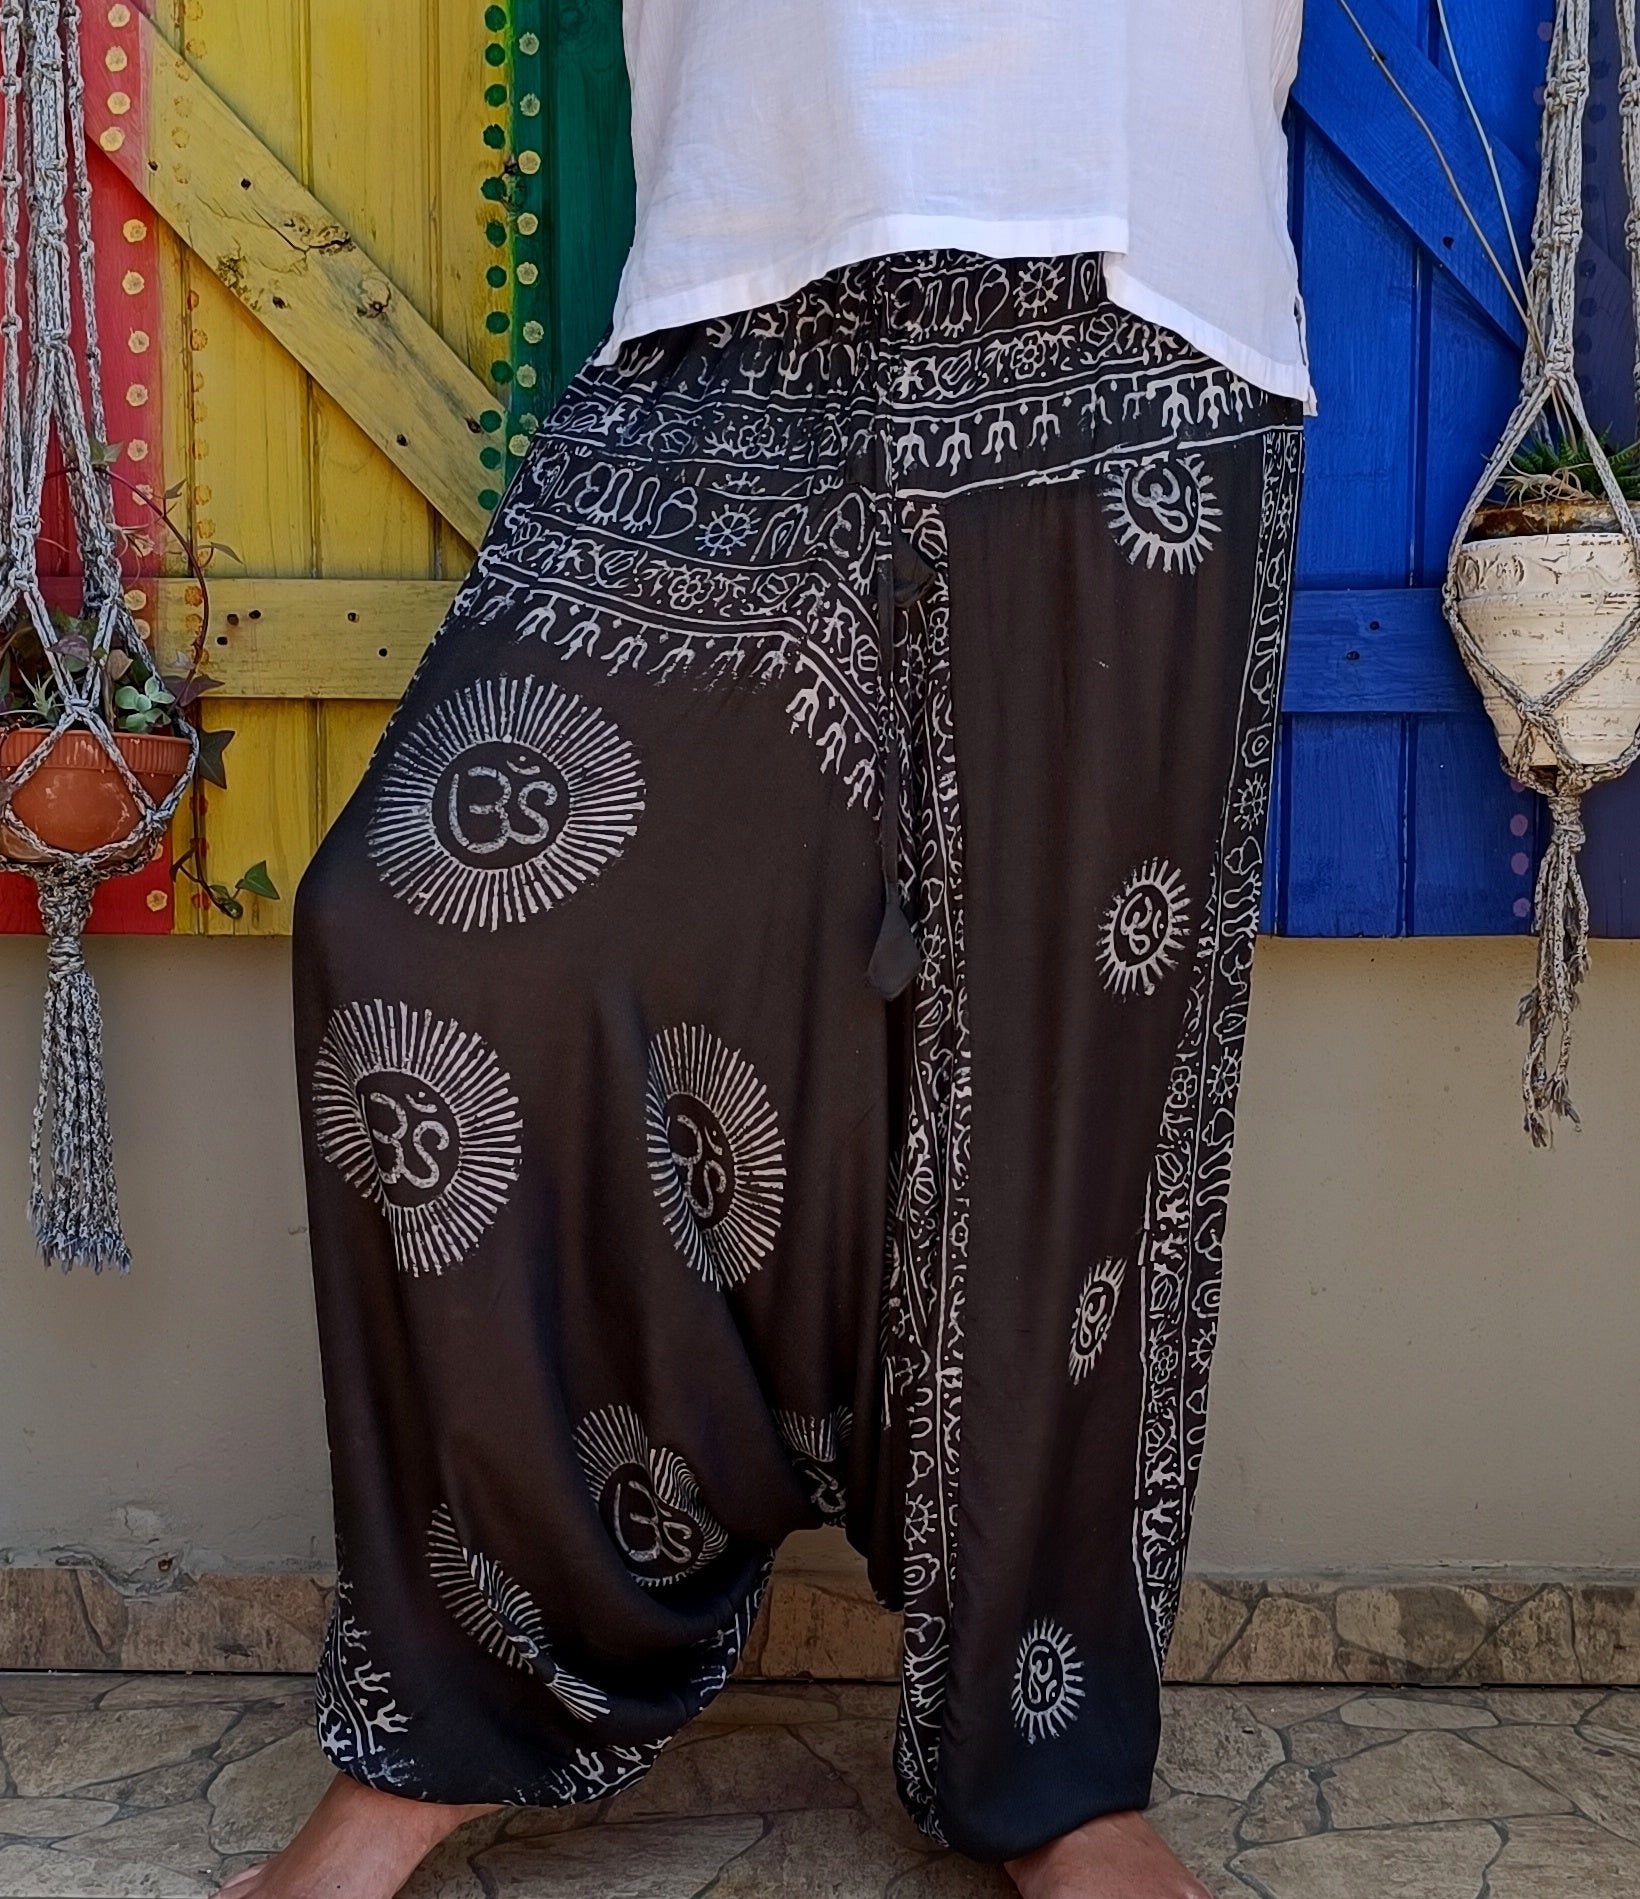 Ramnami Mantra Printed Long Pants – TASPA The Hippie Shop